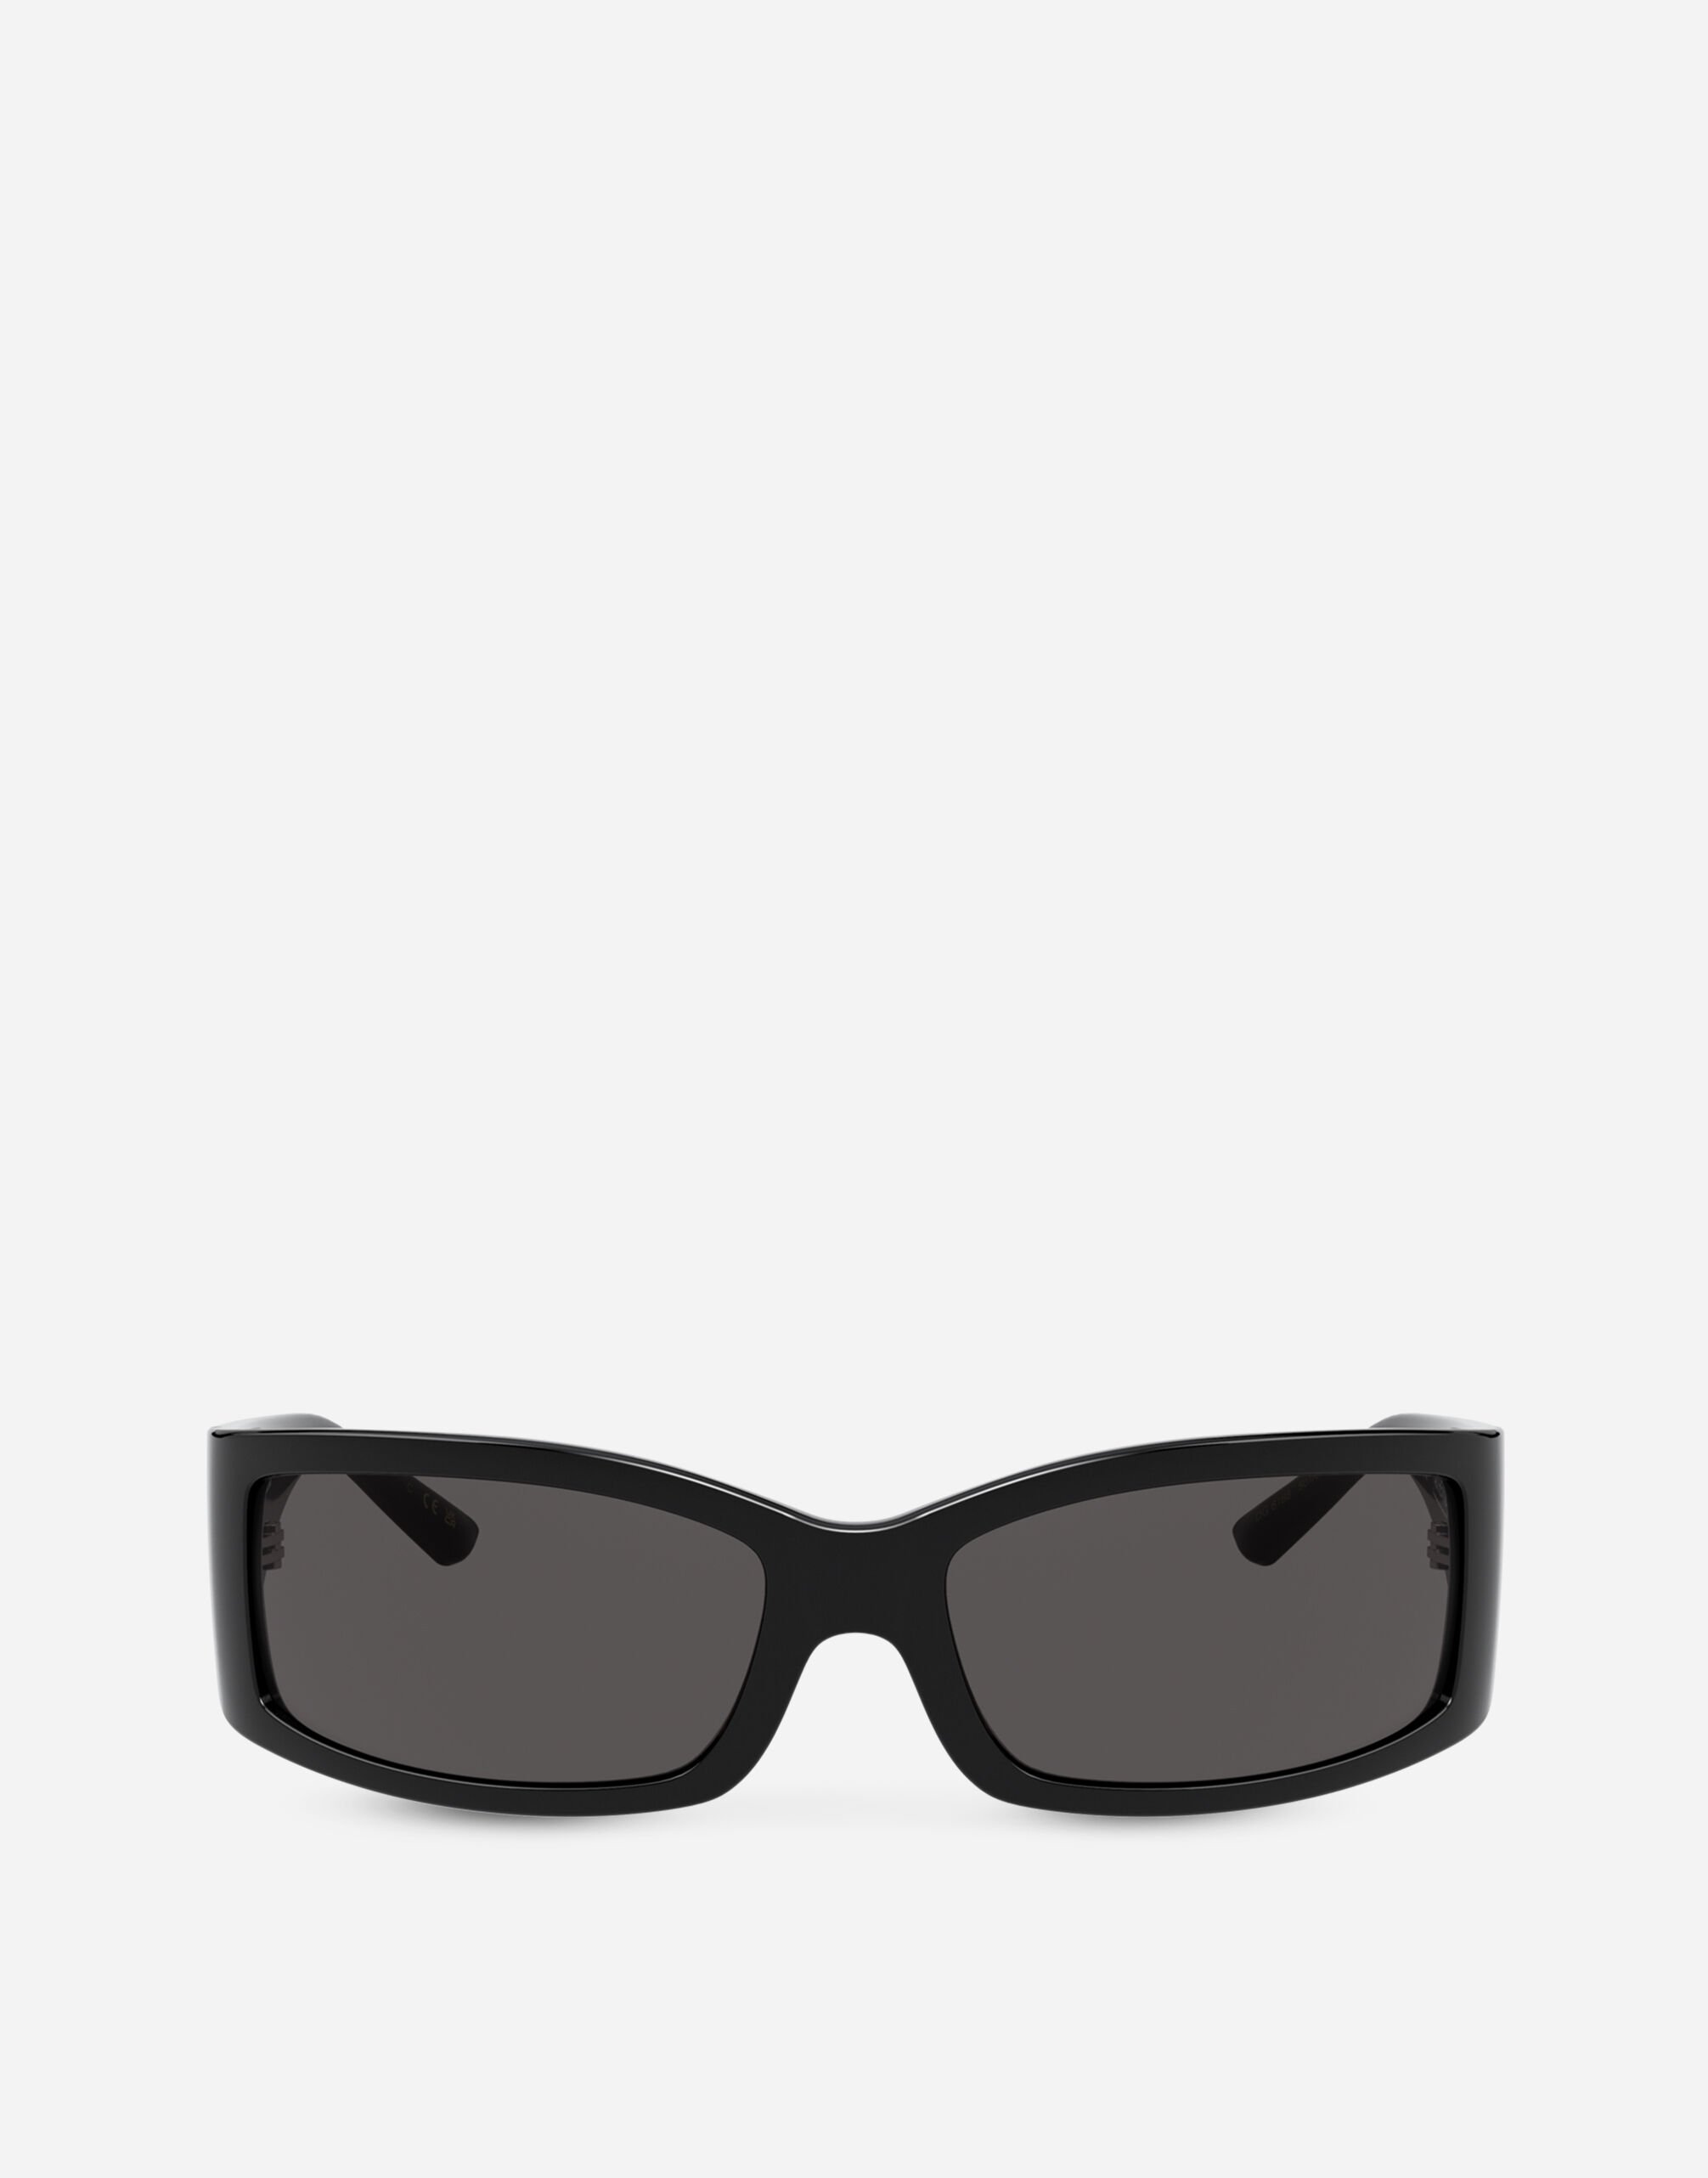 Dolce & Gabbana Re- Edition | Sunglasses Black VG6144VN18G